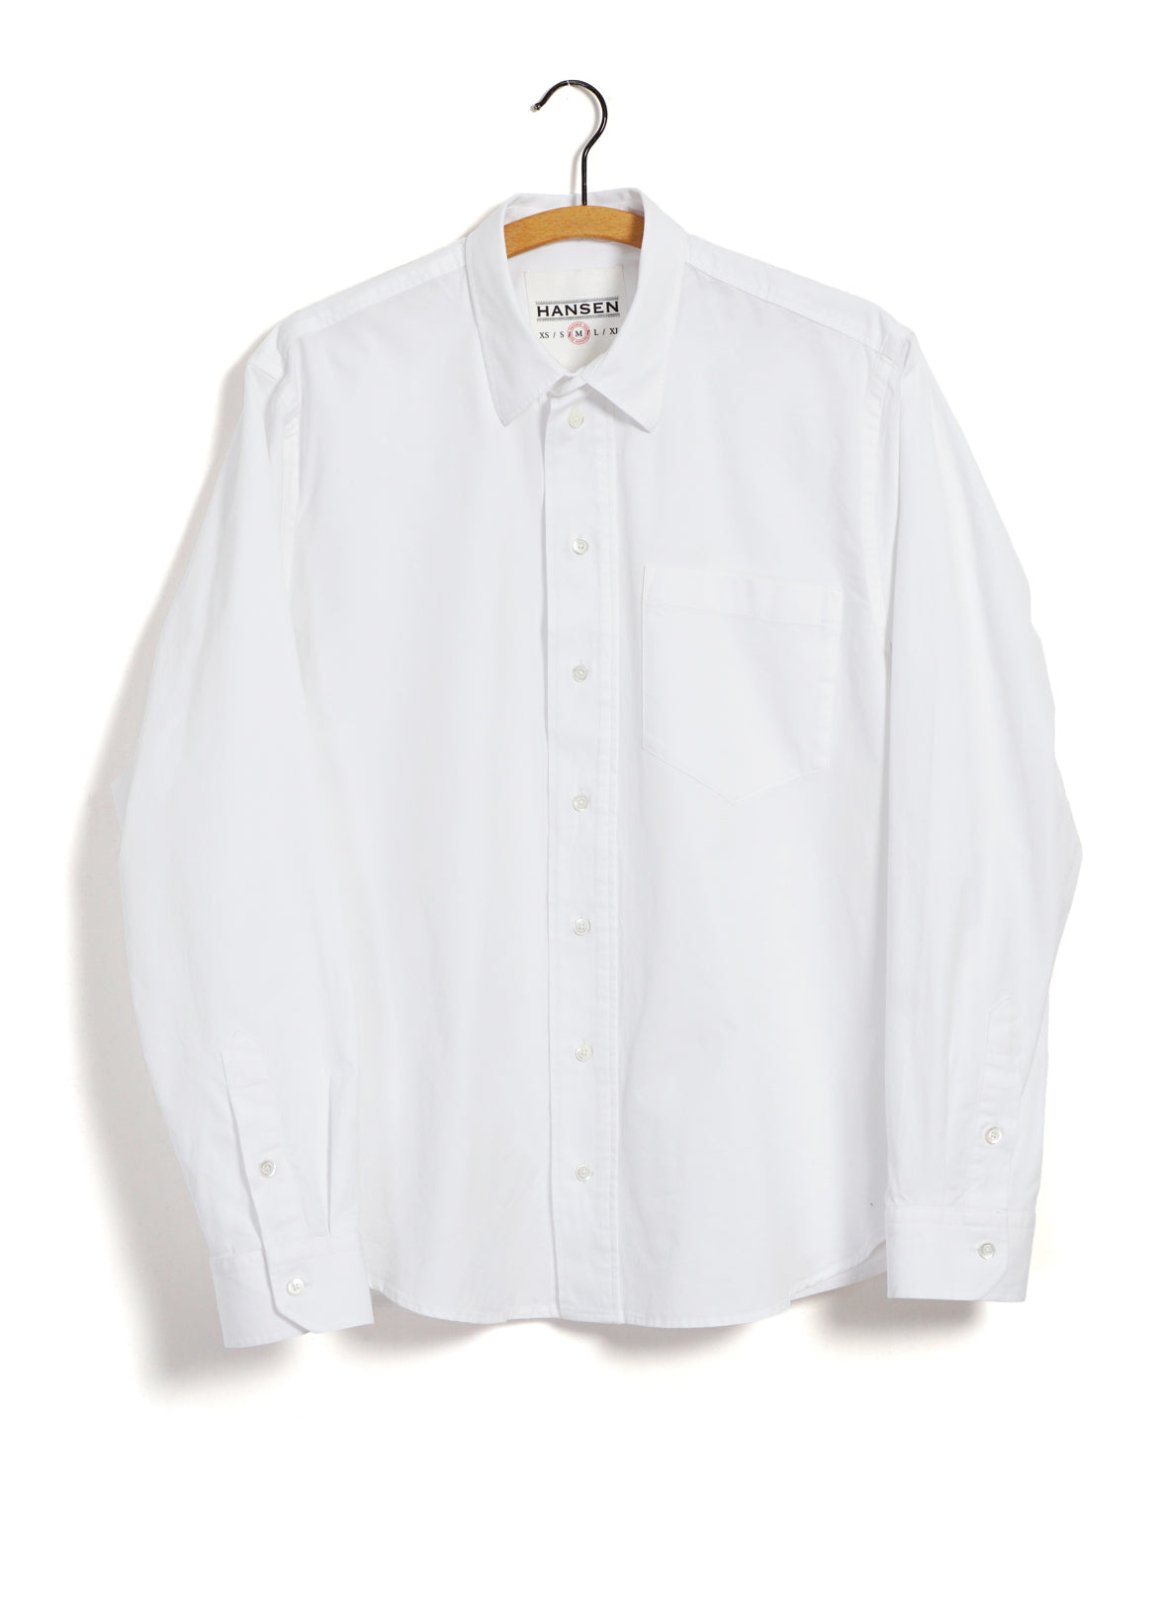 HANSEN GARMENTS - RAYMOND | Relaxed Classic Shirt | White - HANSEN Garments